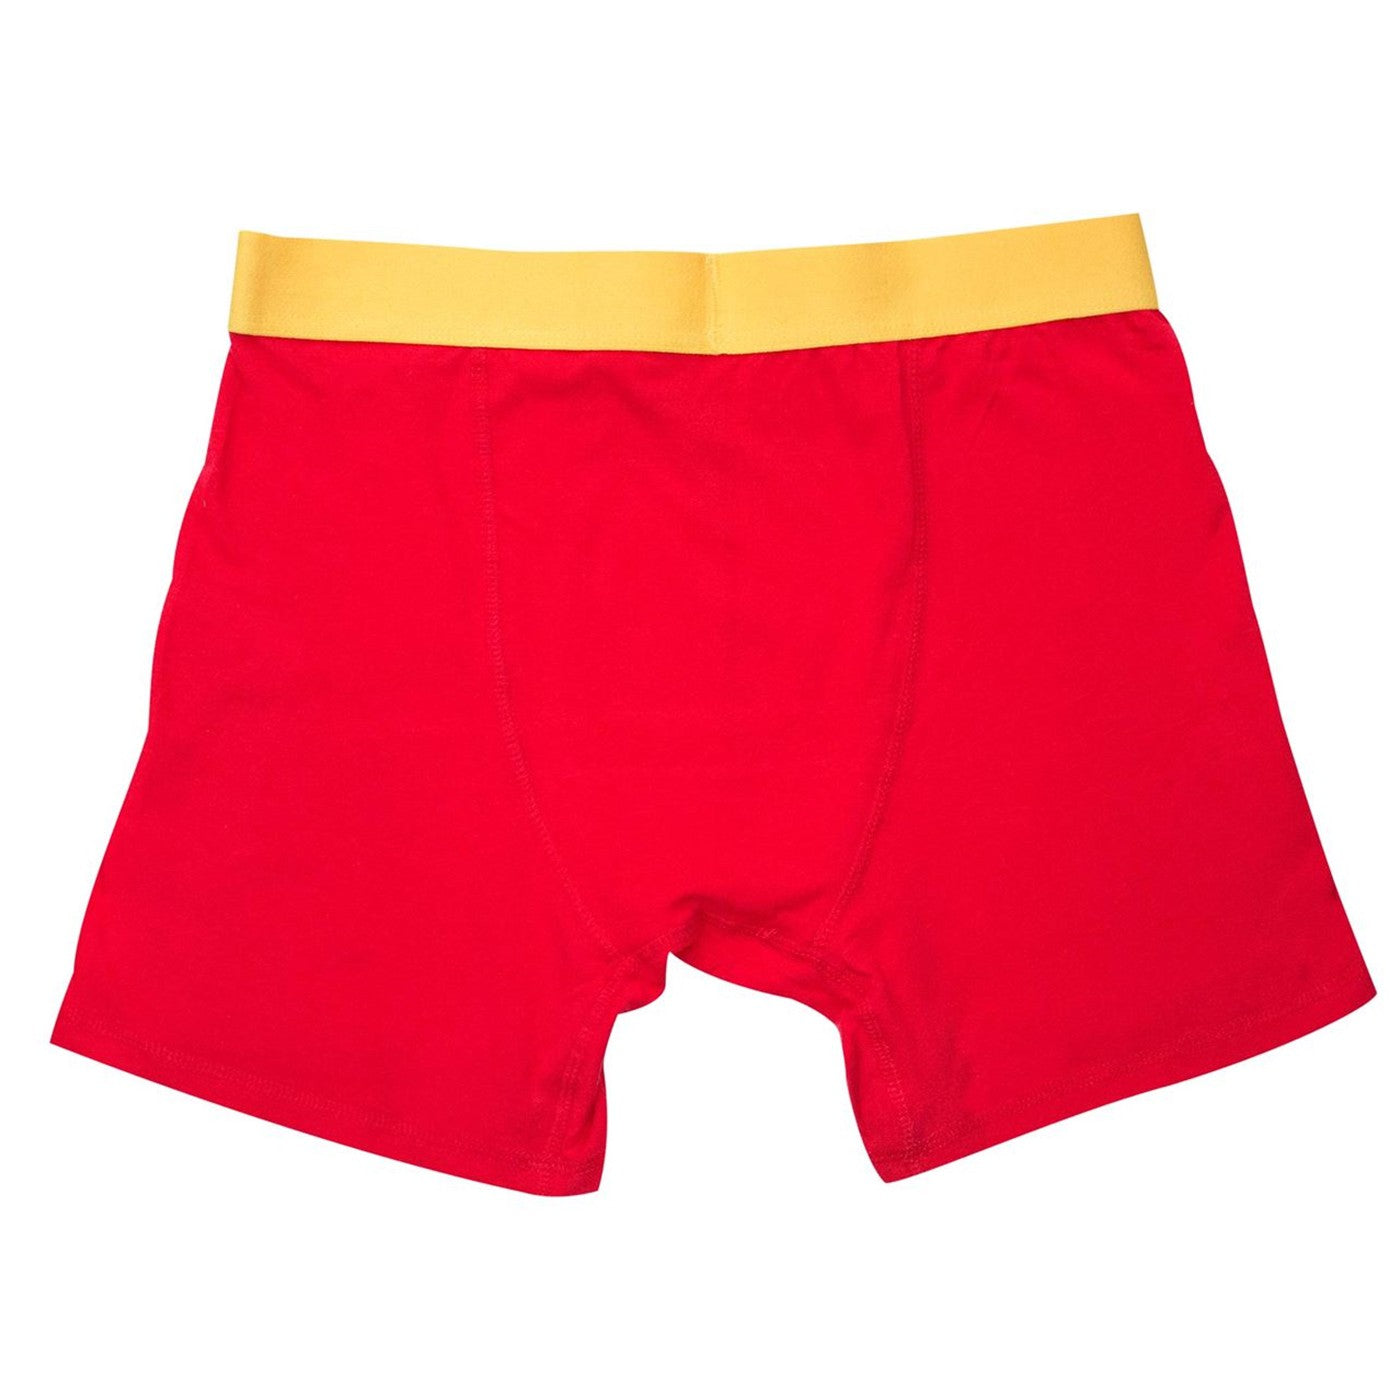 title:Flash Classic Men's Underwear Boxer Briefs;color:Red